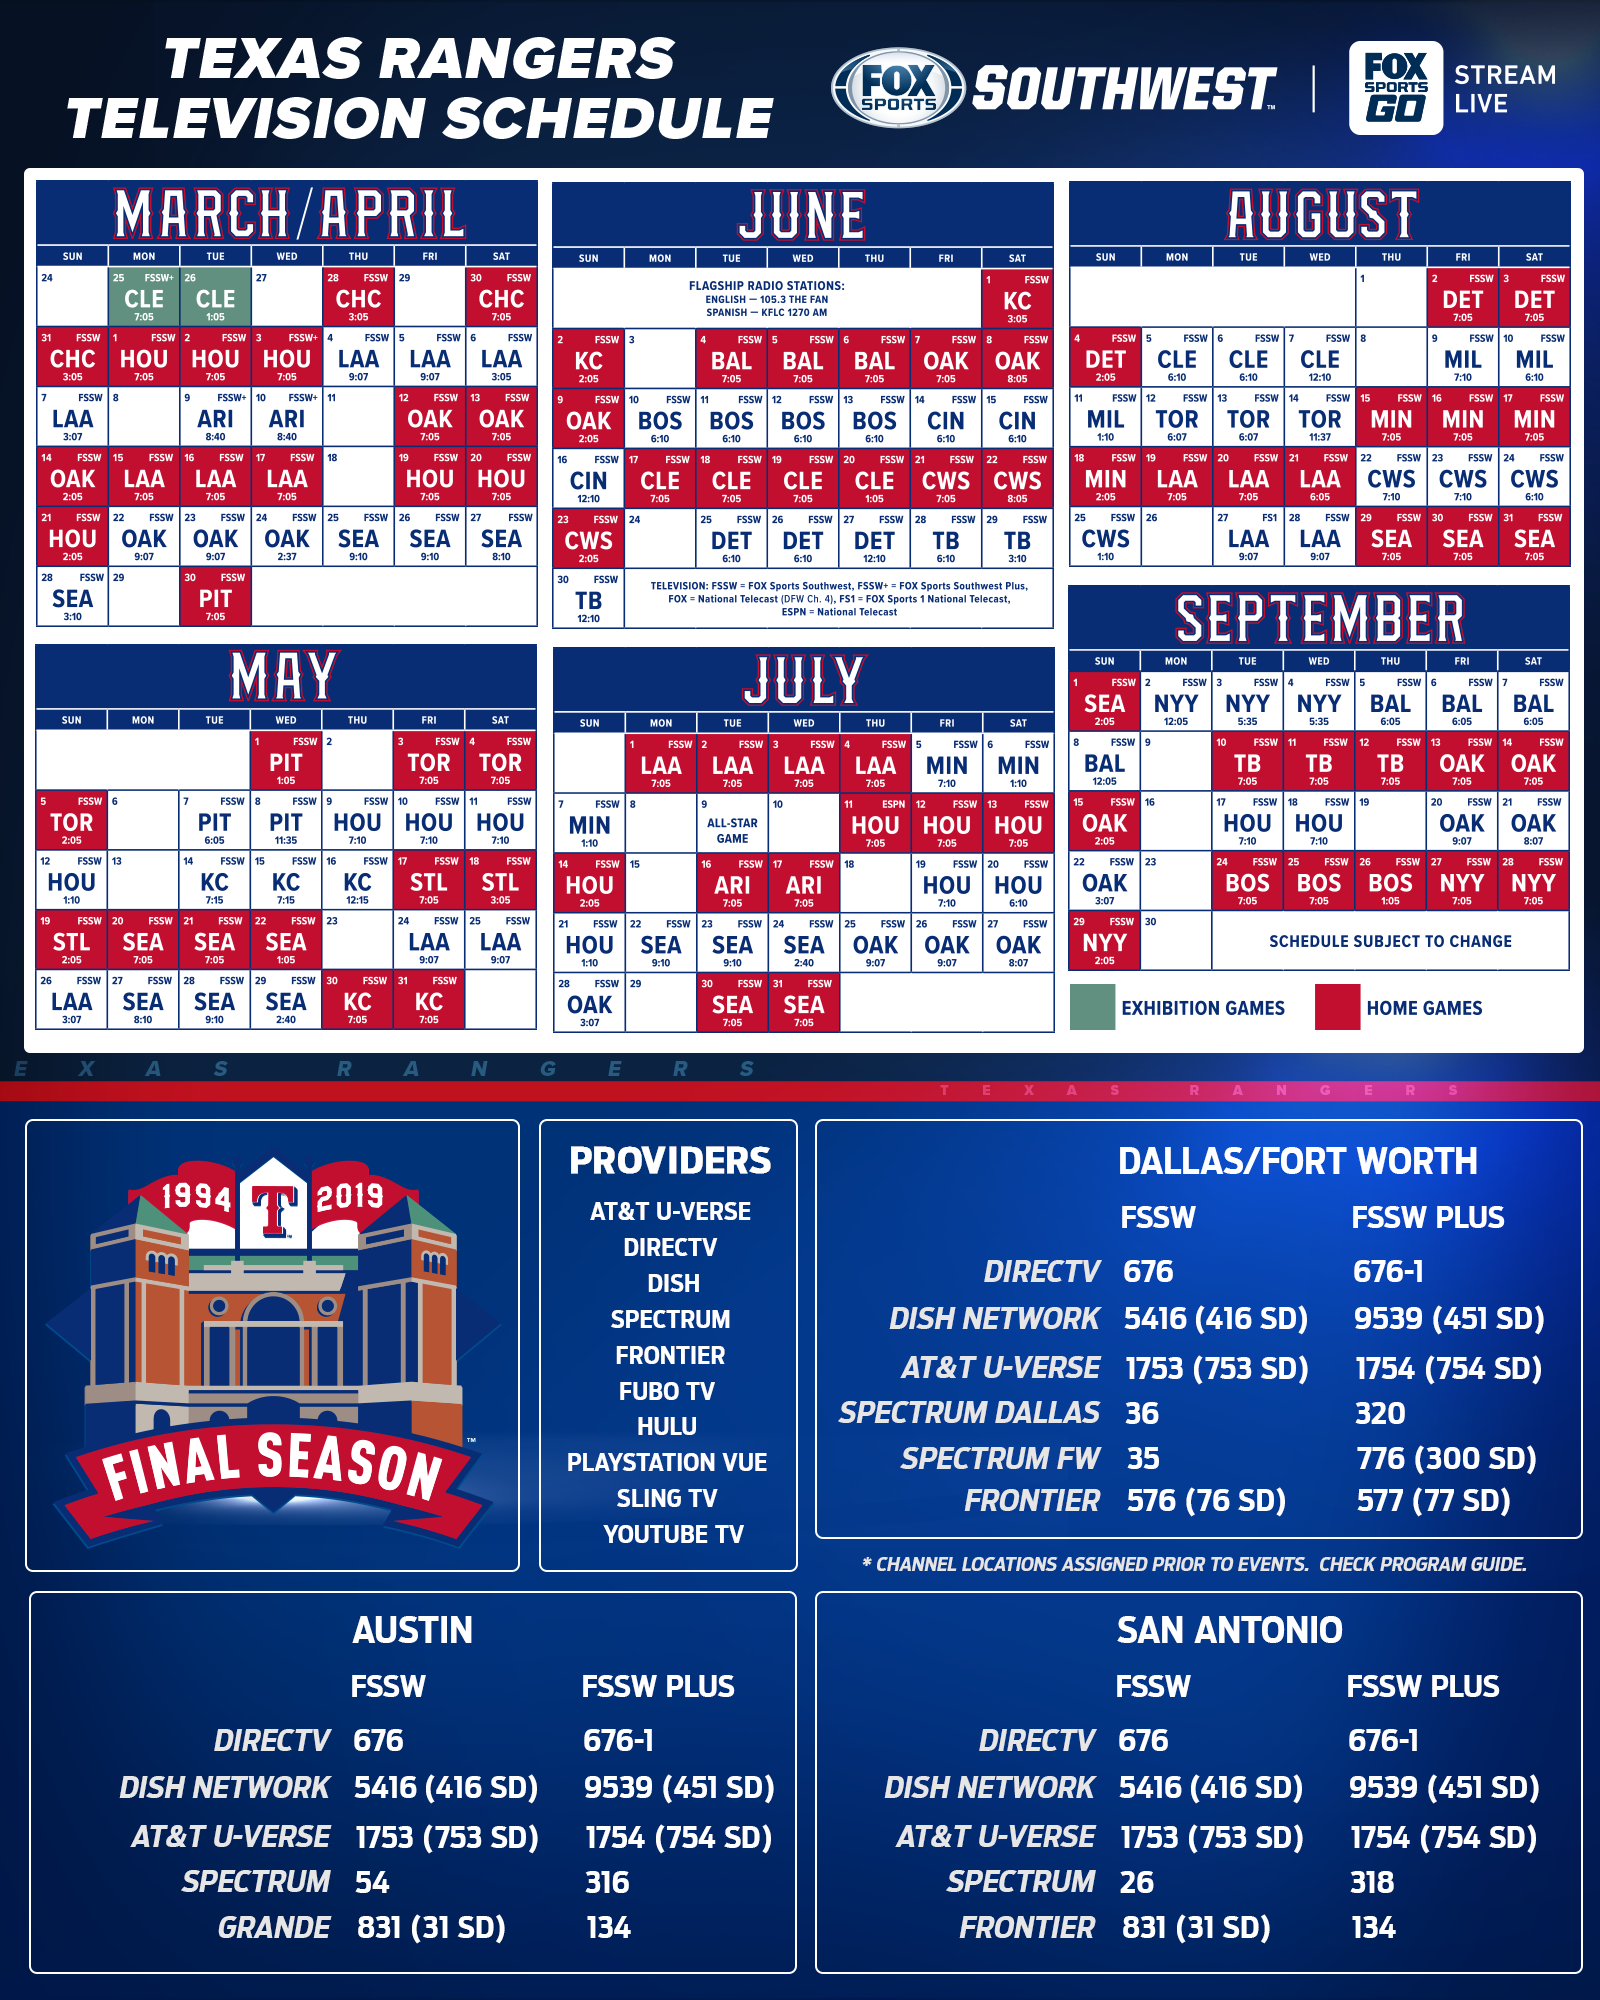 Printable Texas Rangers Schedule